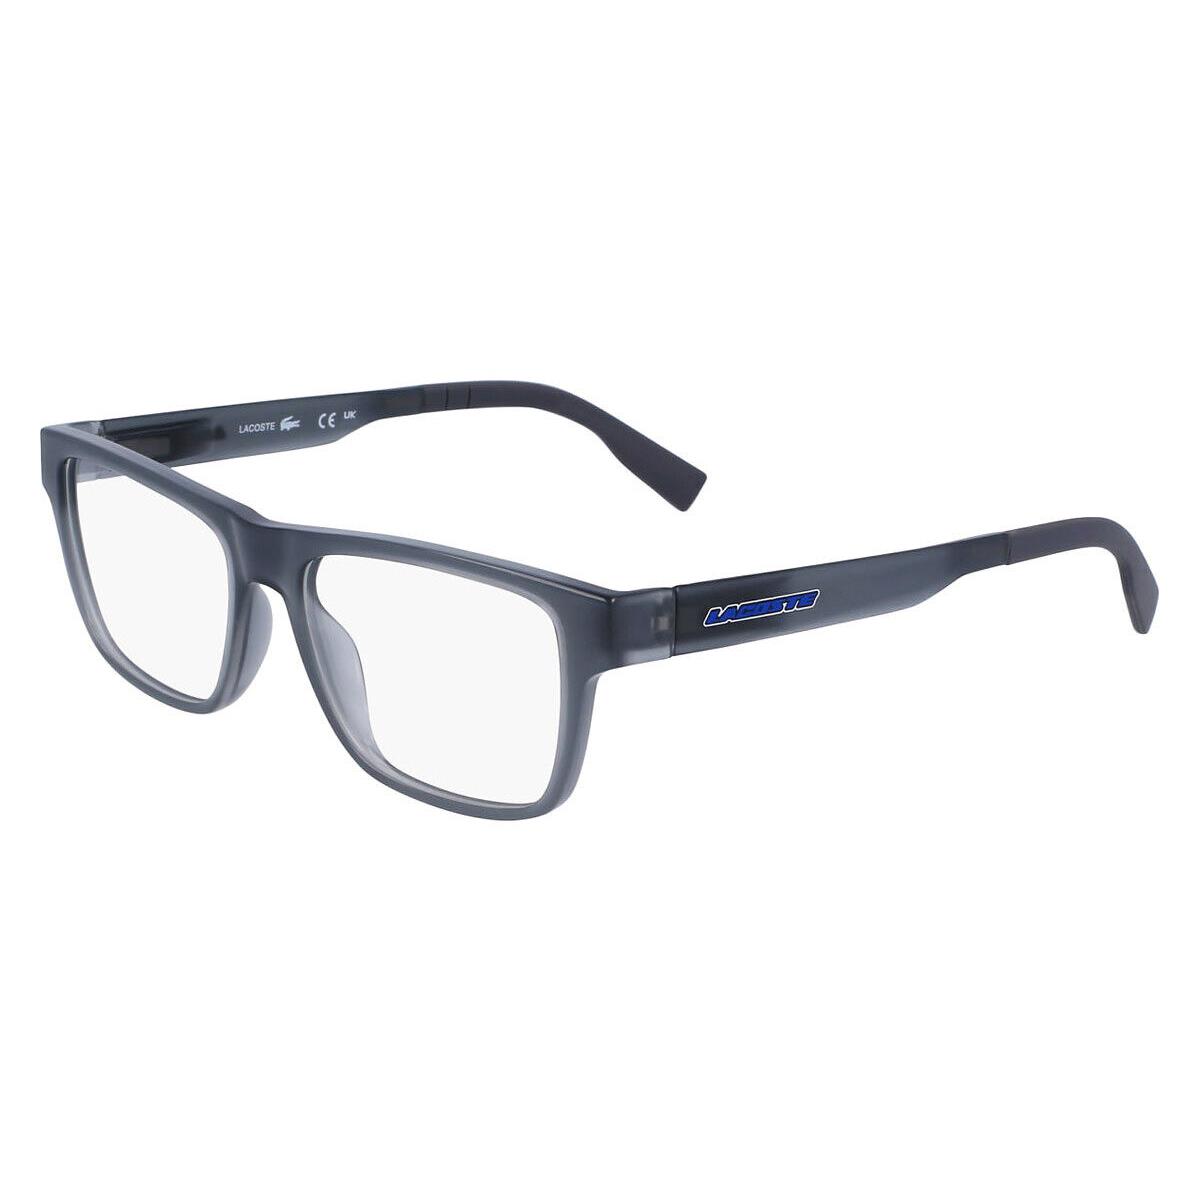 Lacoste L3655 Eyeglasses Kids Gray Lumi Square 49mm - Frame: Gray Lumi, Lens: